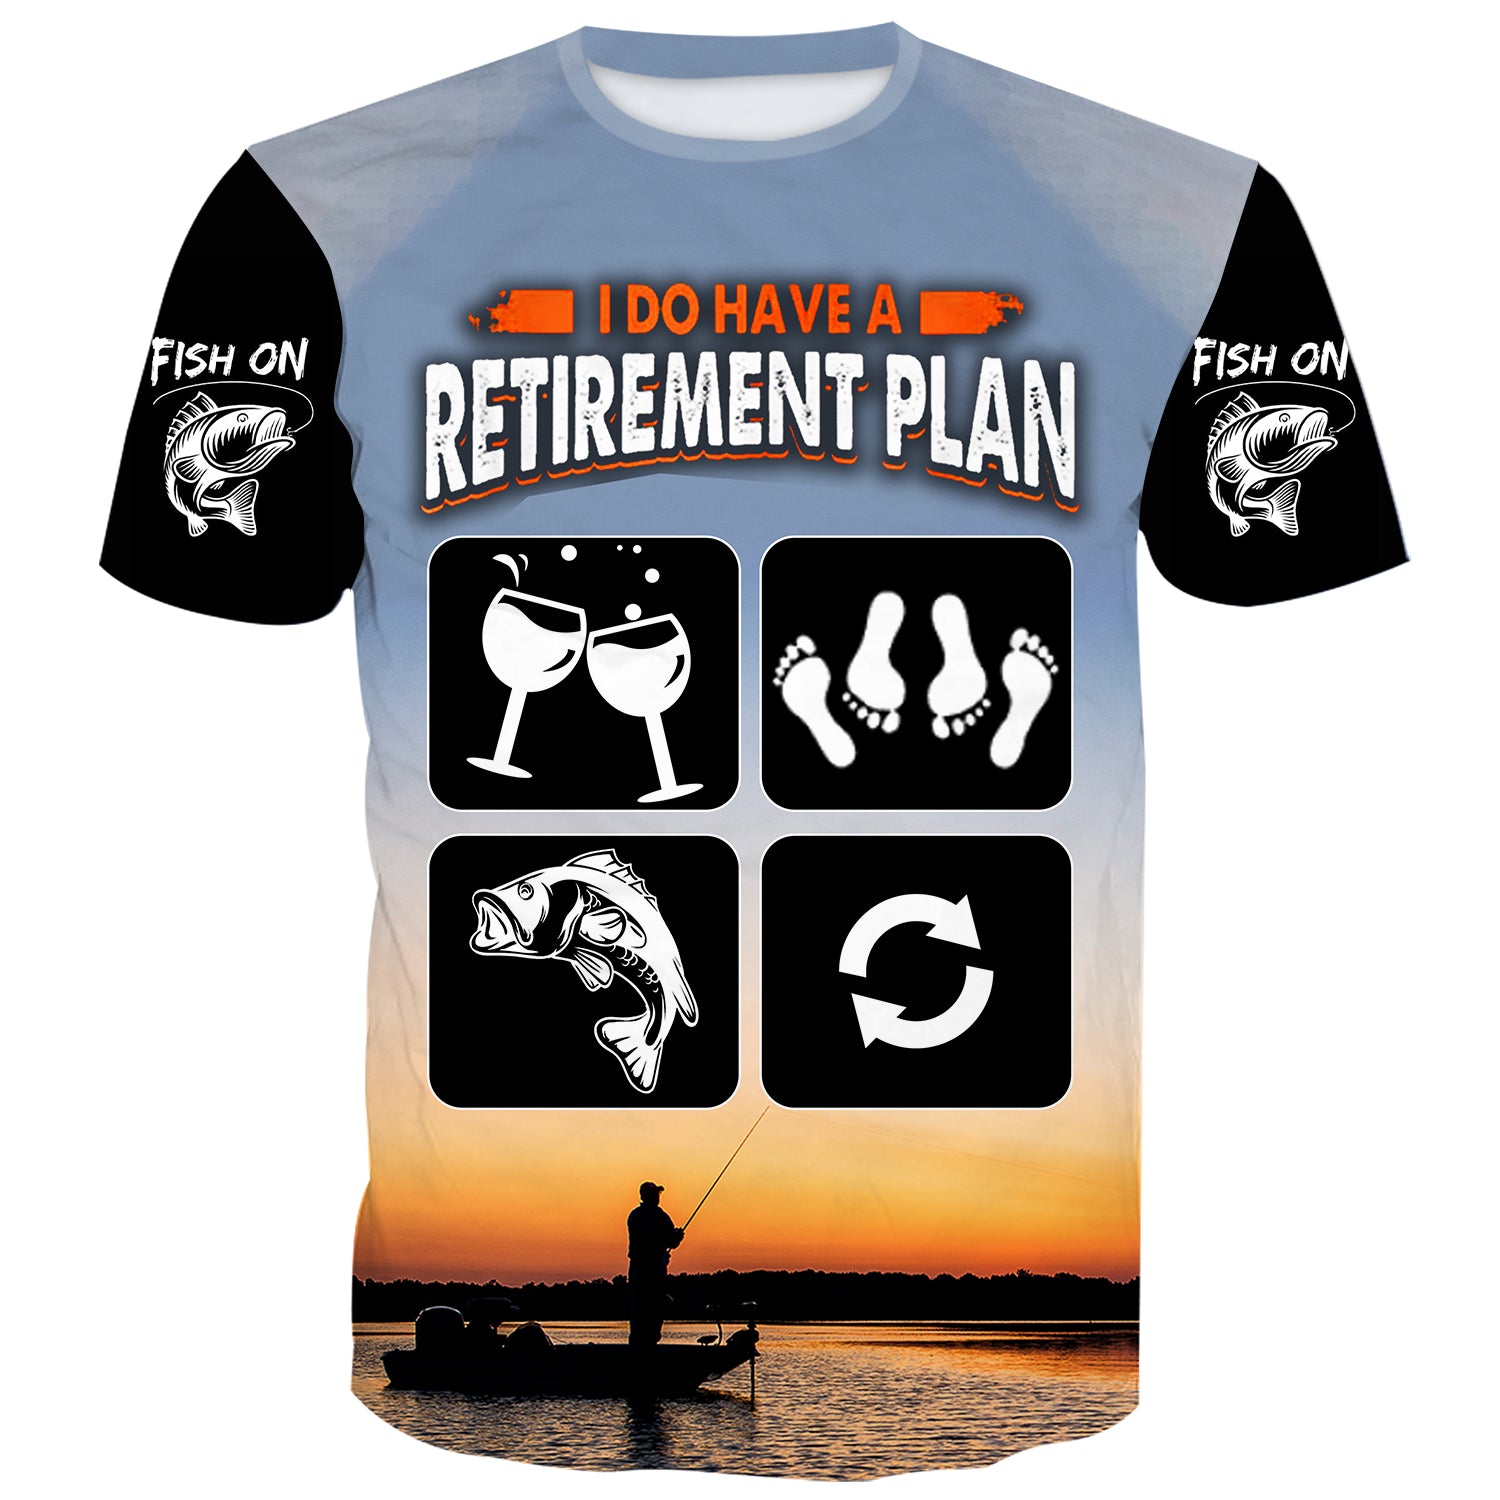 I do have a Retirement Plan - Fishing T-Shirt